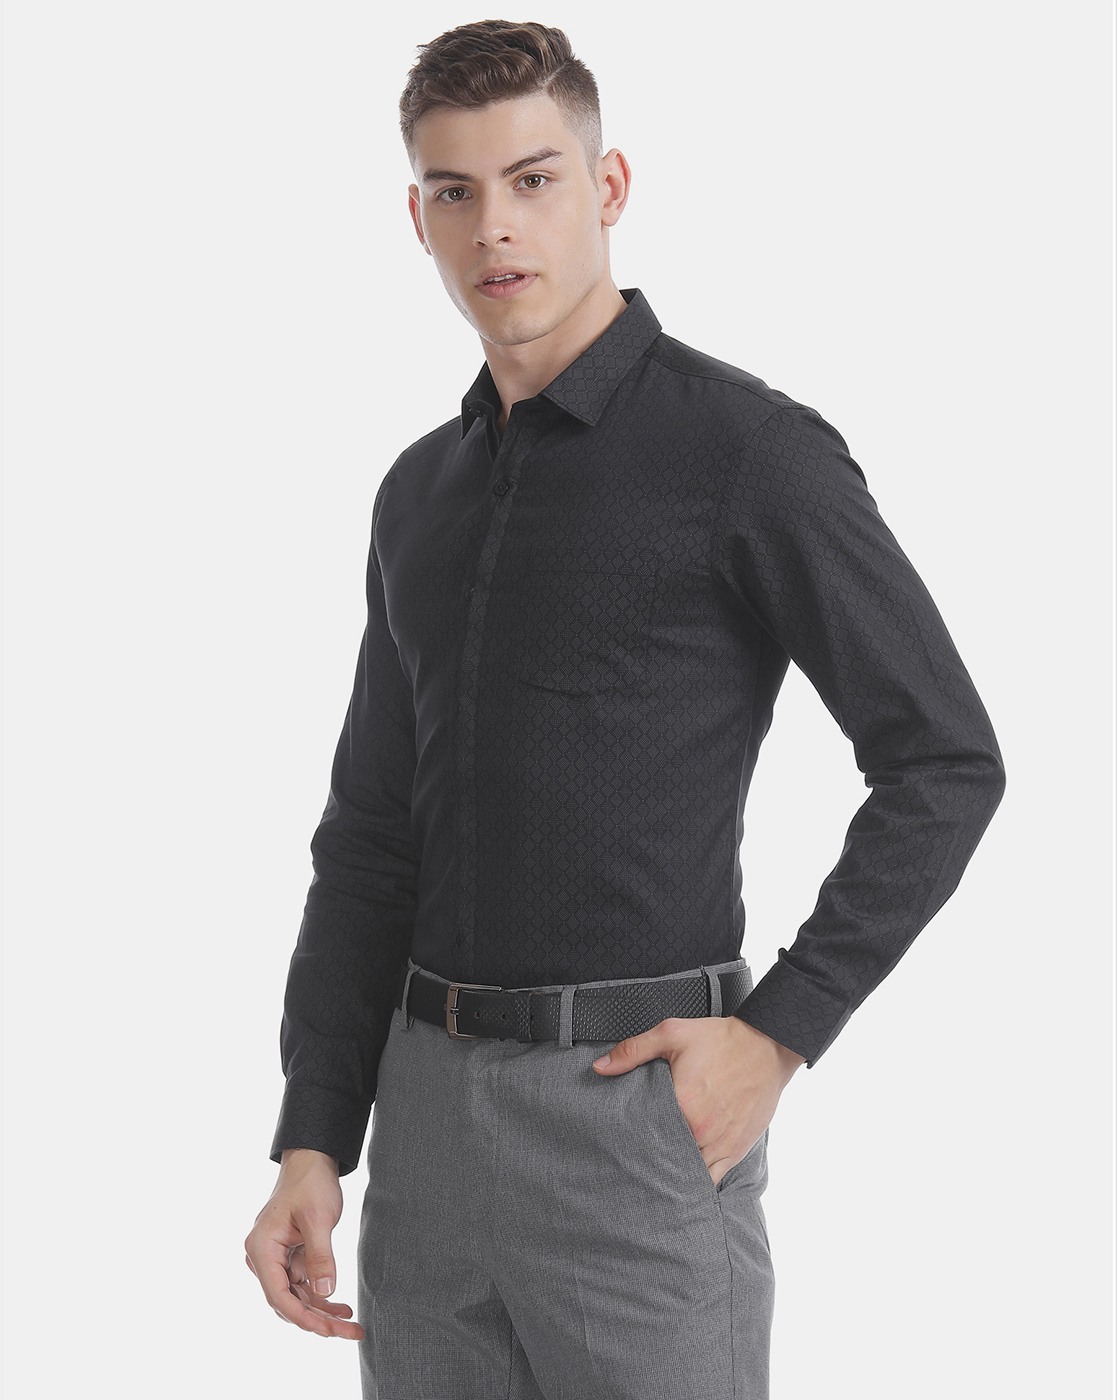 Black shirt textured grey trouser | Black shirt, Grey trousers, Shirts